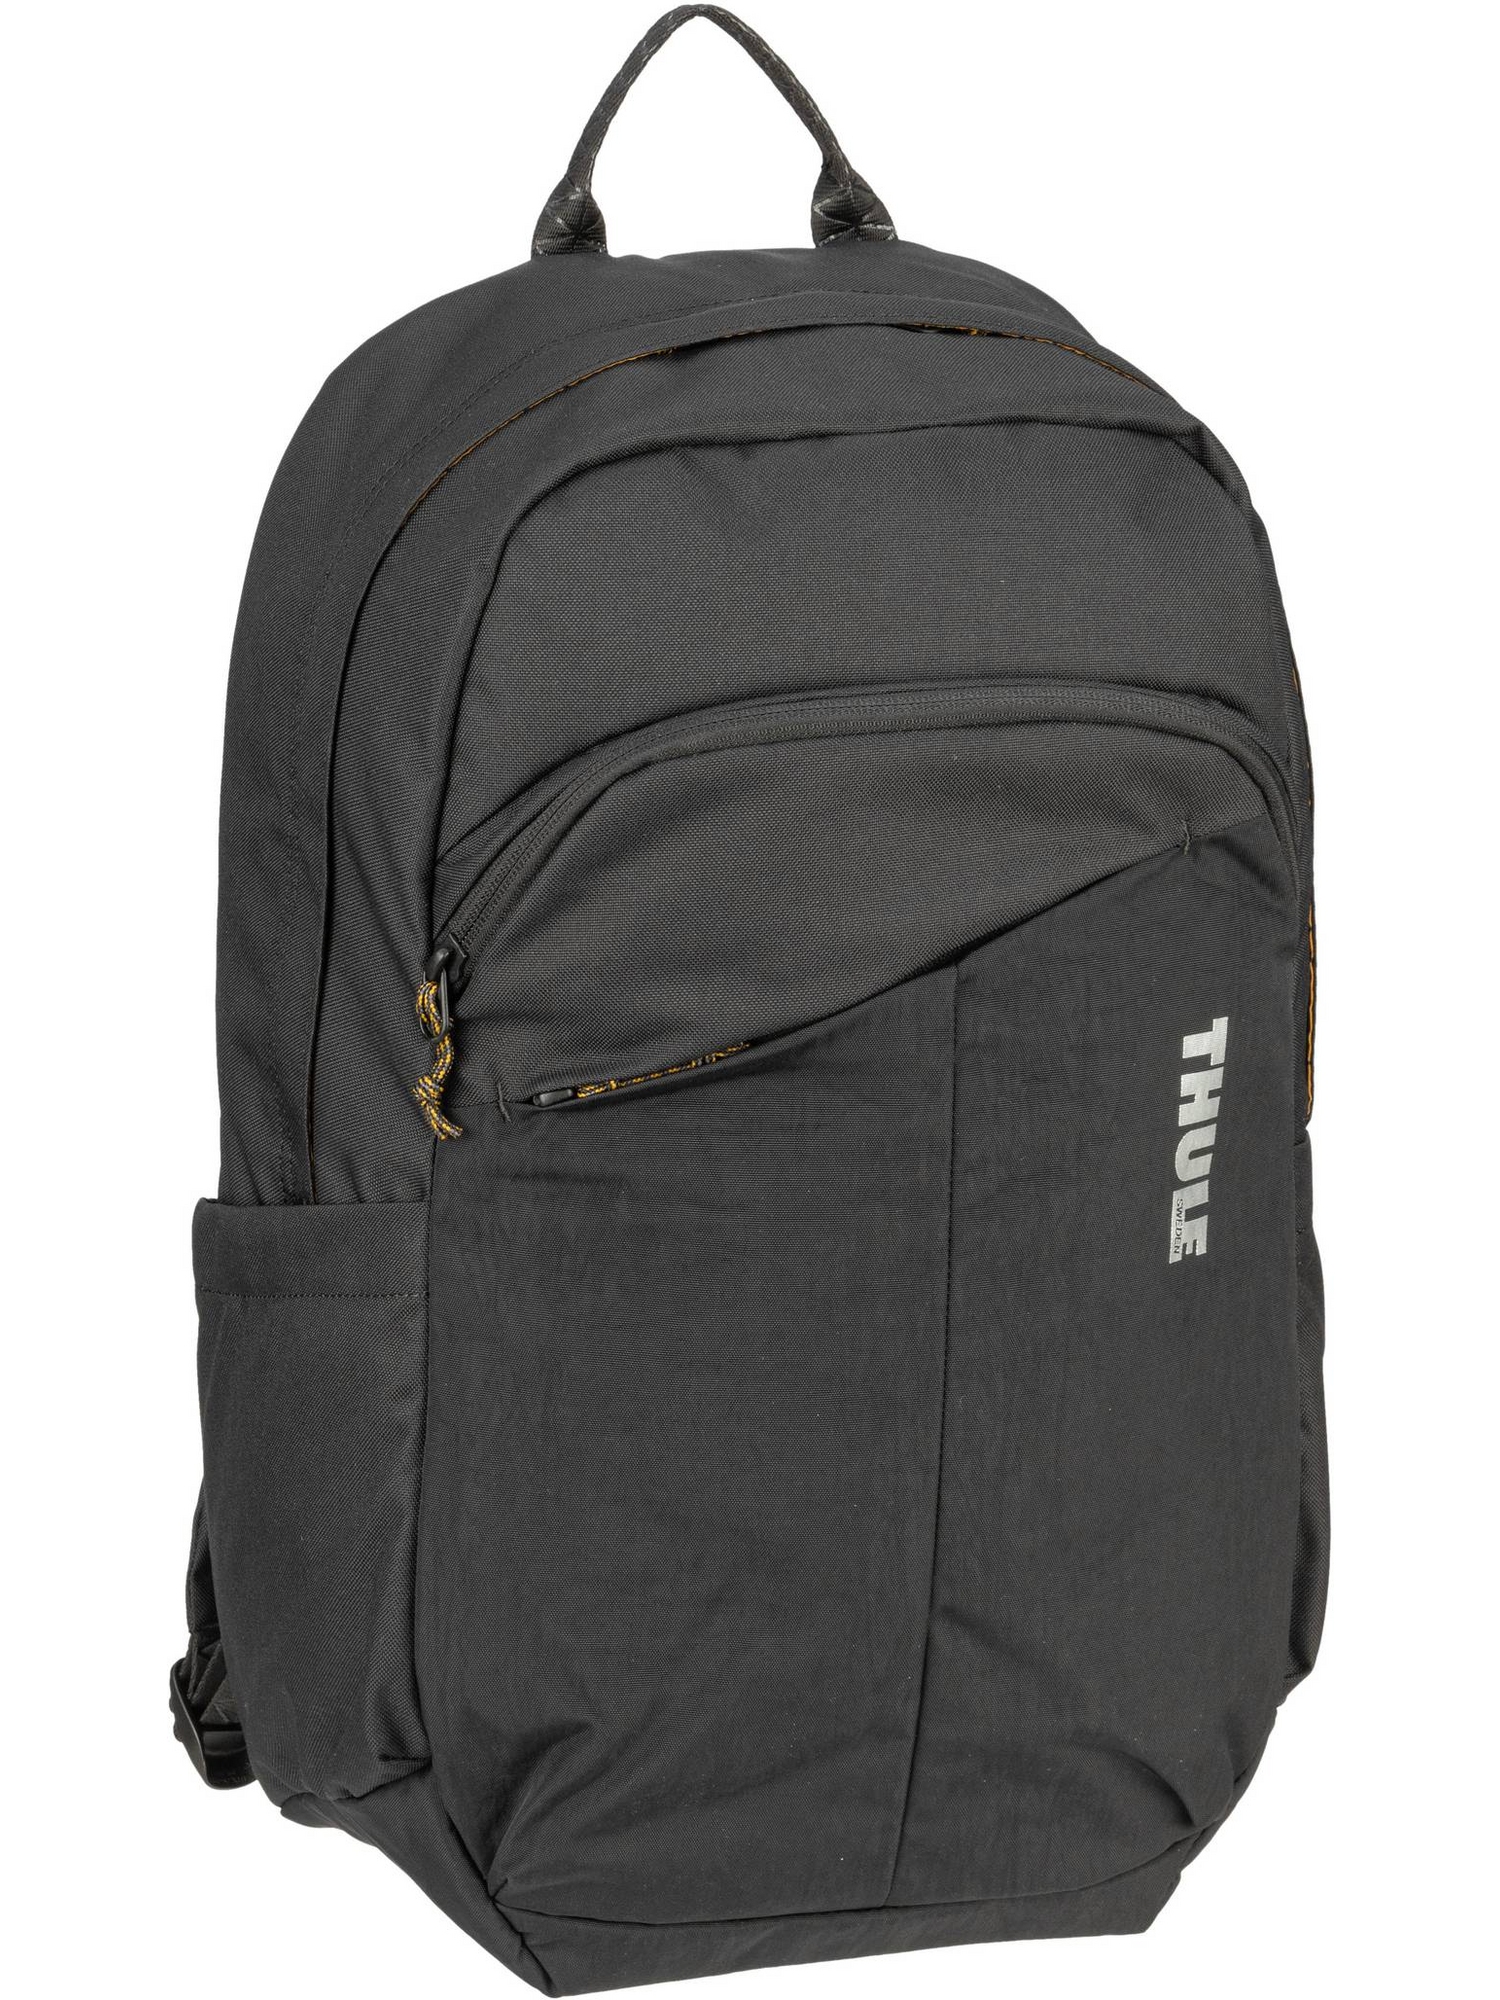 Рюкзак Thule/Backpack Indago Backpack 23L, черный рюкзак thule indago 23l оливковый 3204775